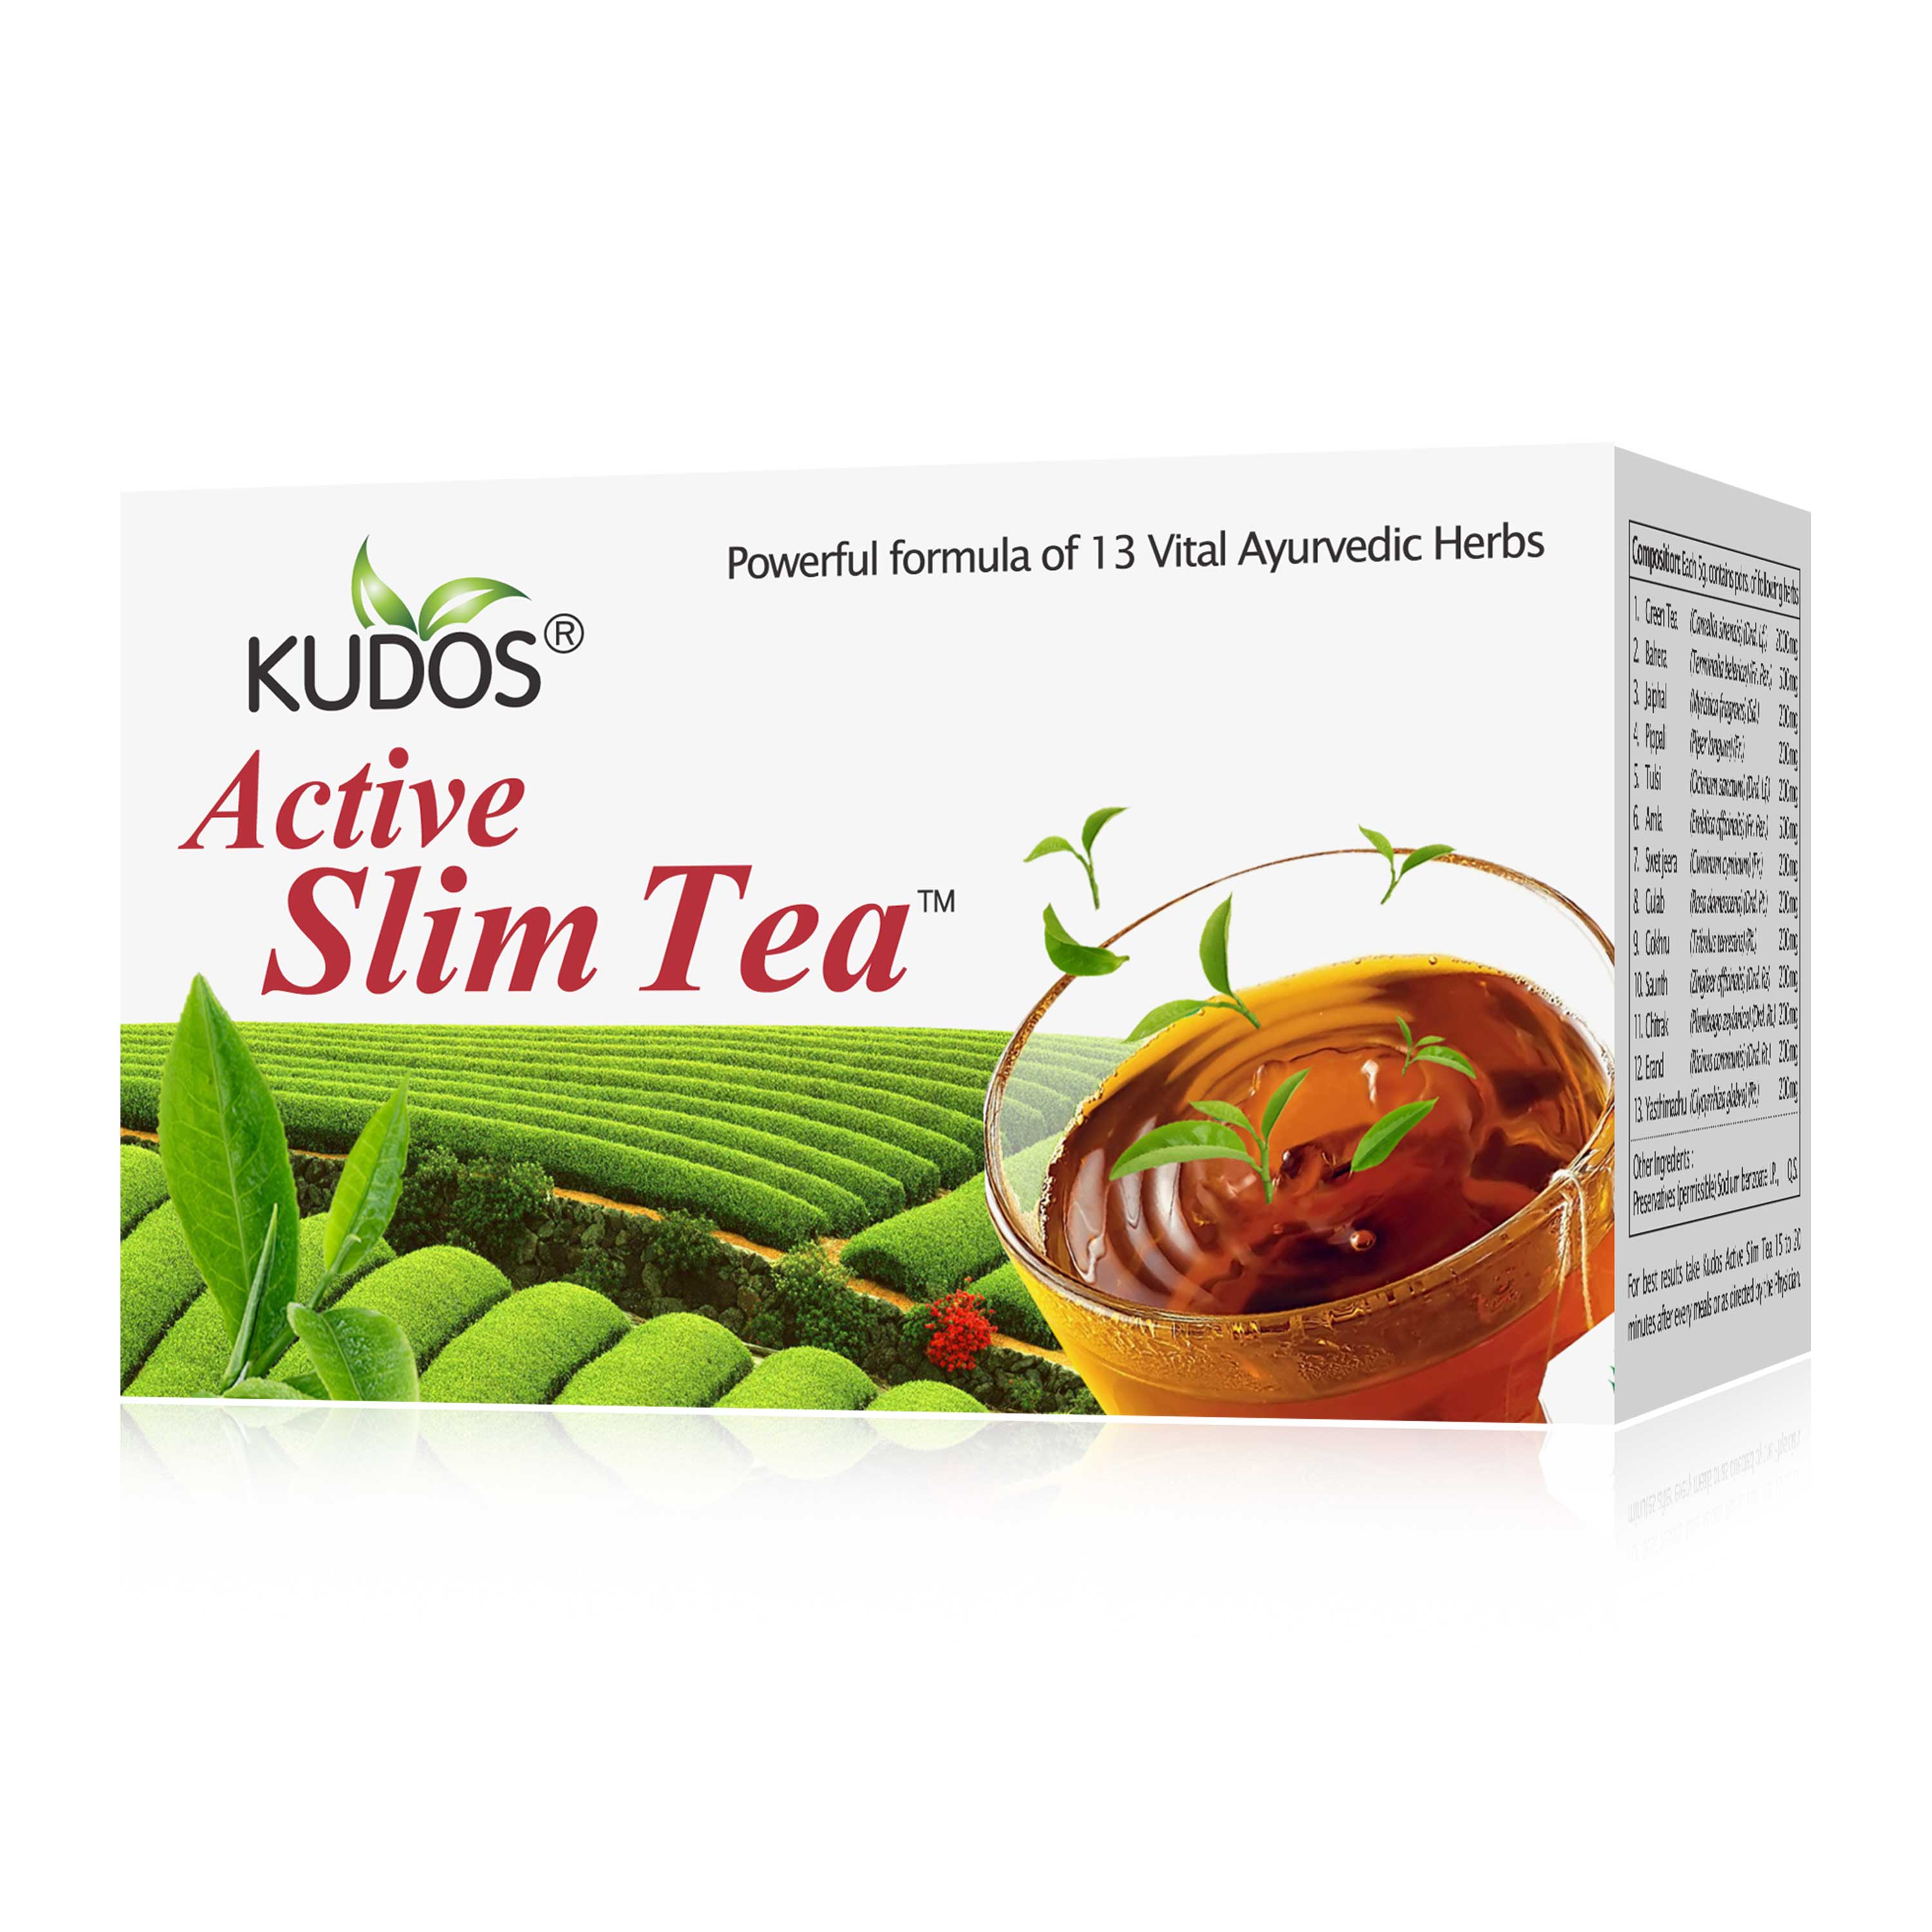 Active Slim Tea